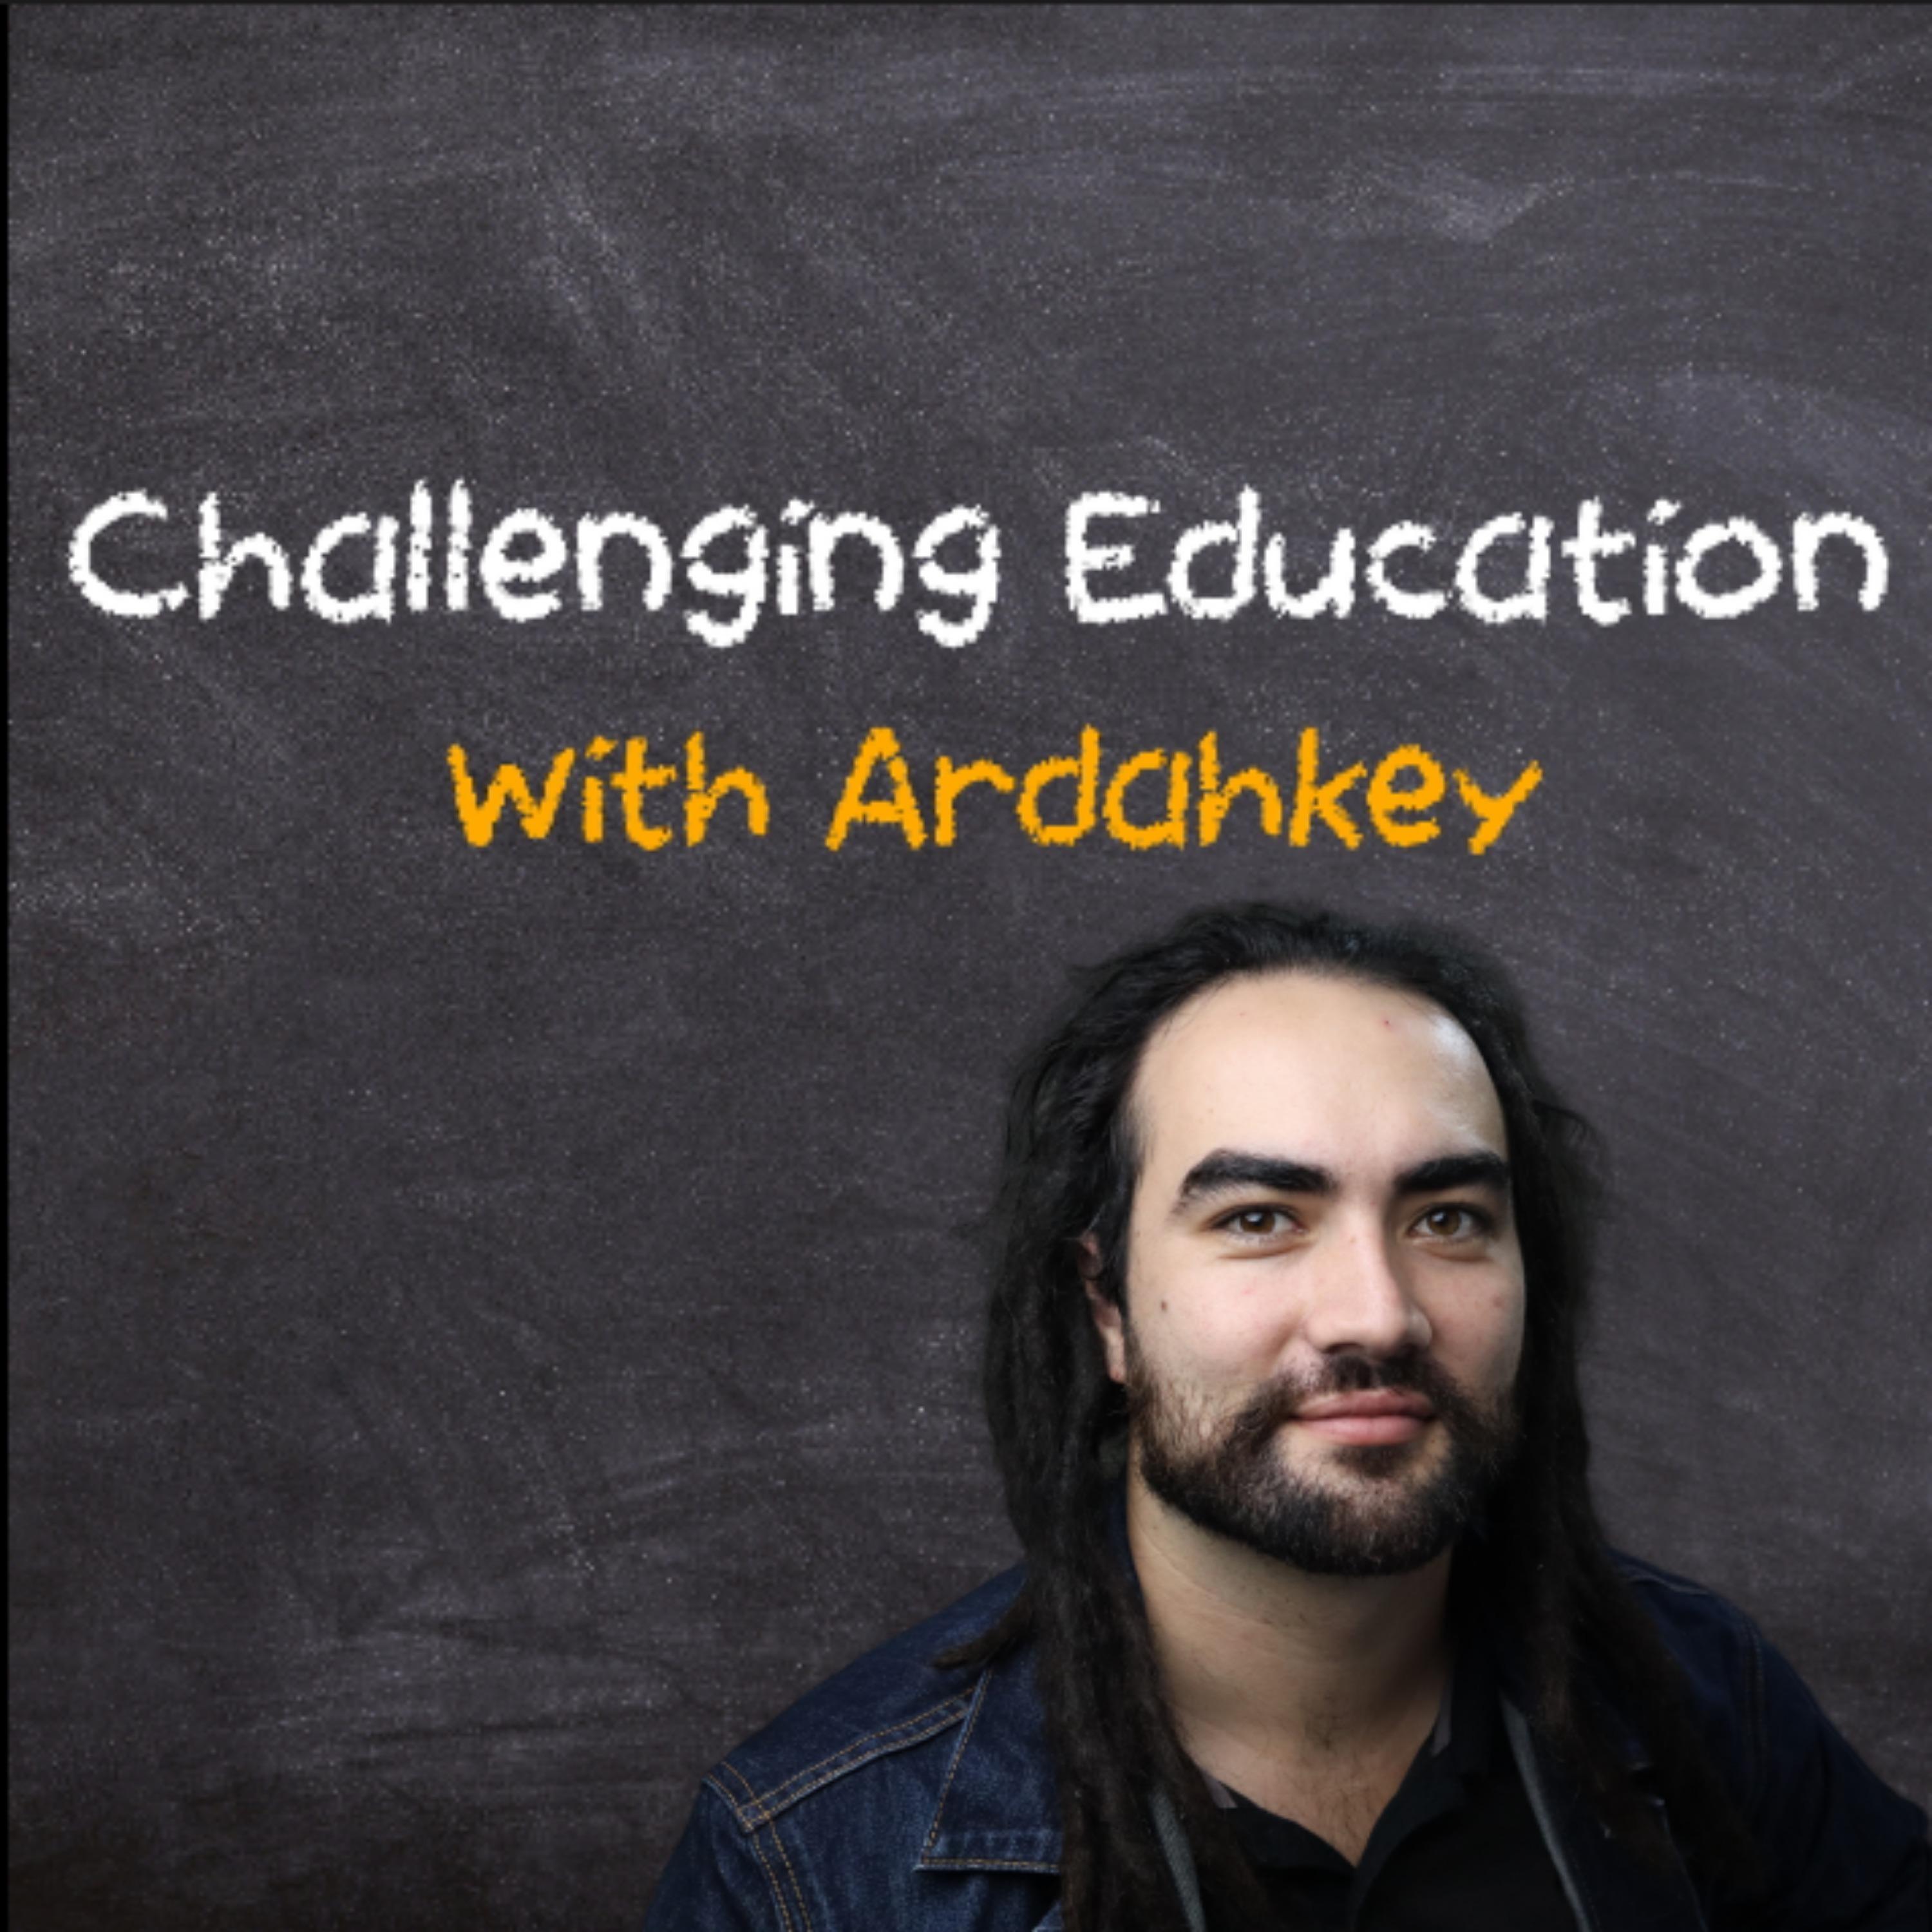 Challenging Education with Aariki